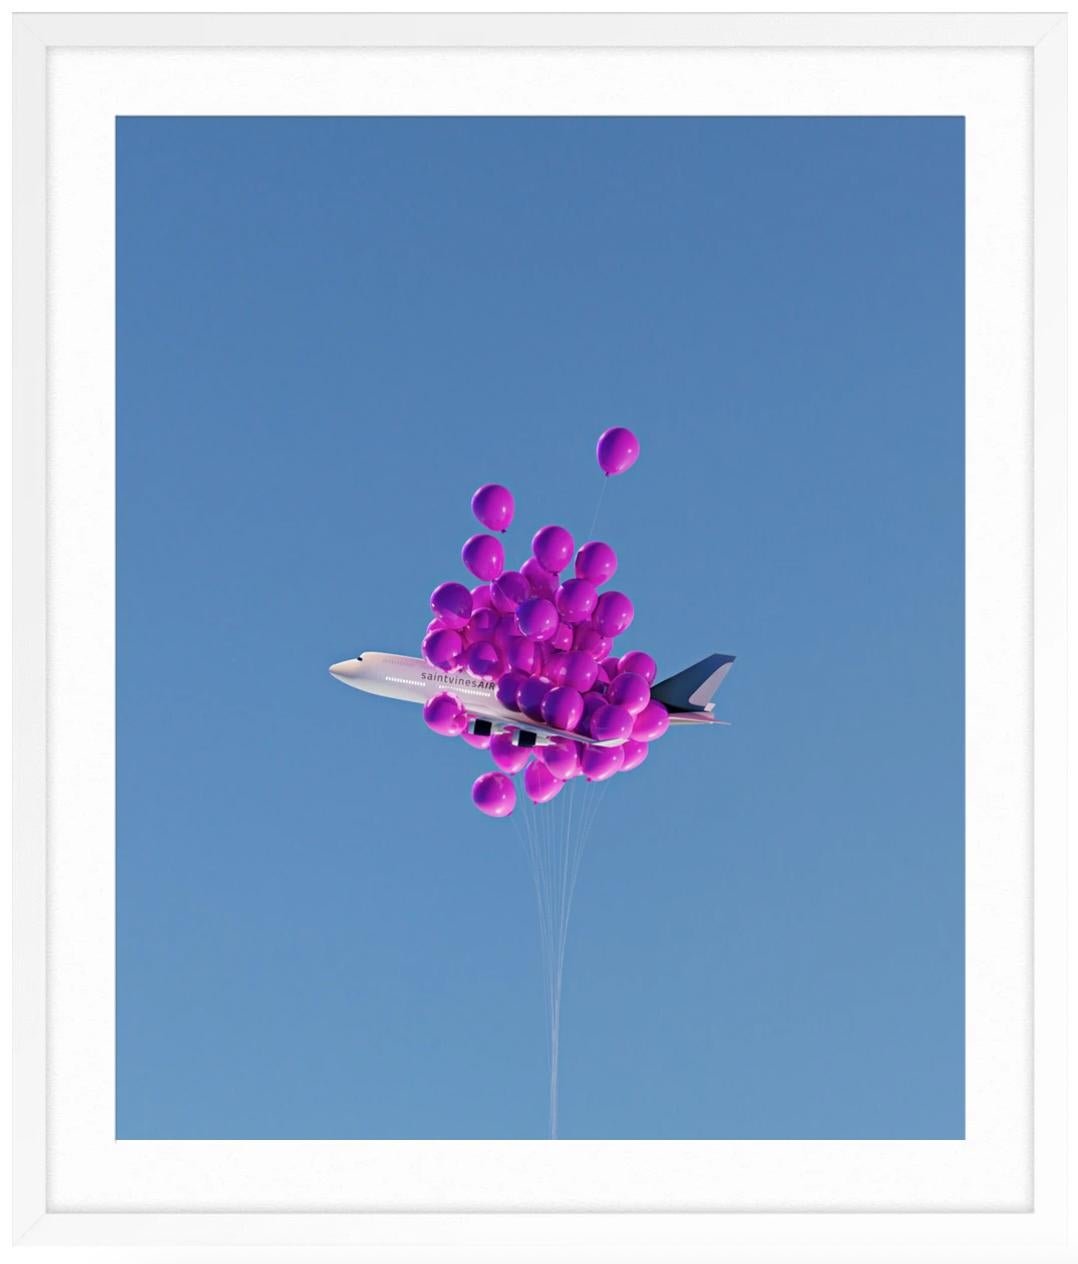 Balloon Flight 2 - Blue Still-Life Photograph by Saint Vines